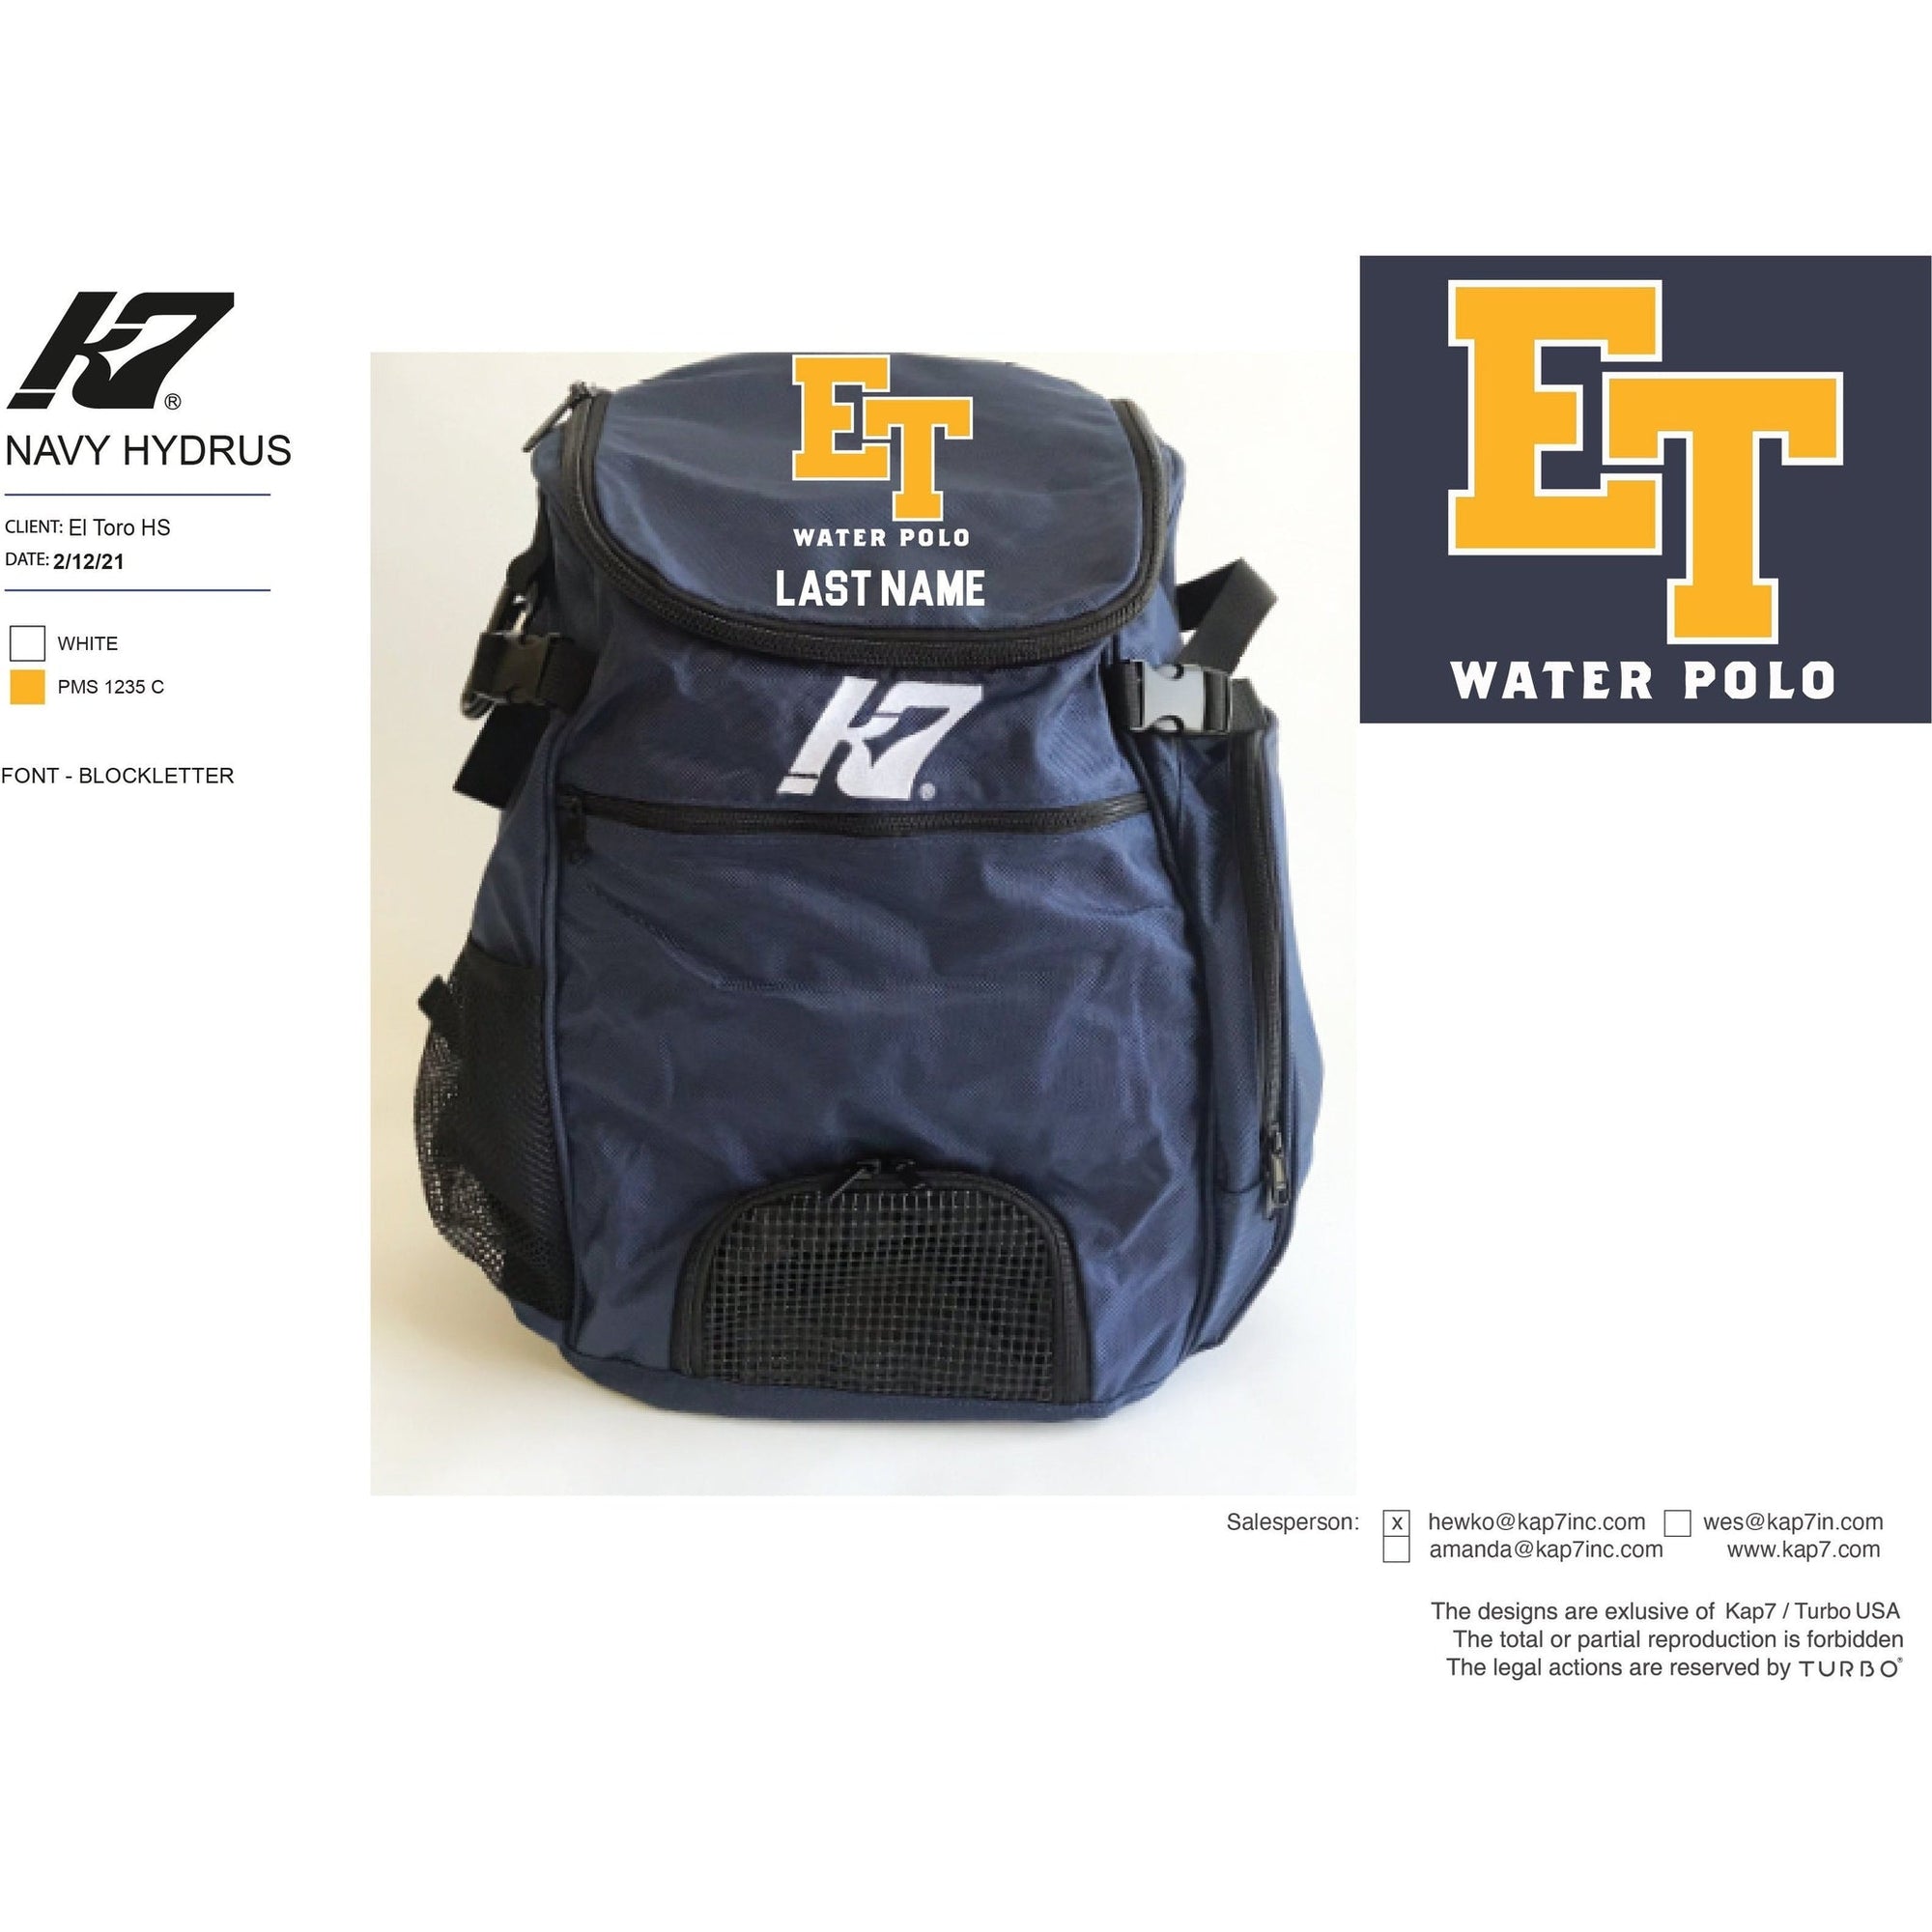 El Toro High School Water Polo Team Store - Backpack with Last Name KAP7 International 